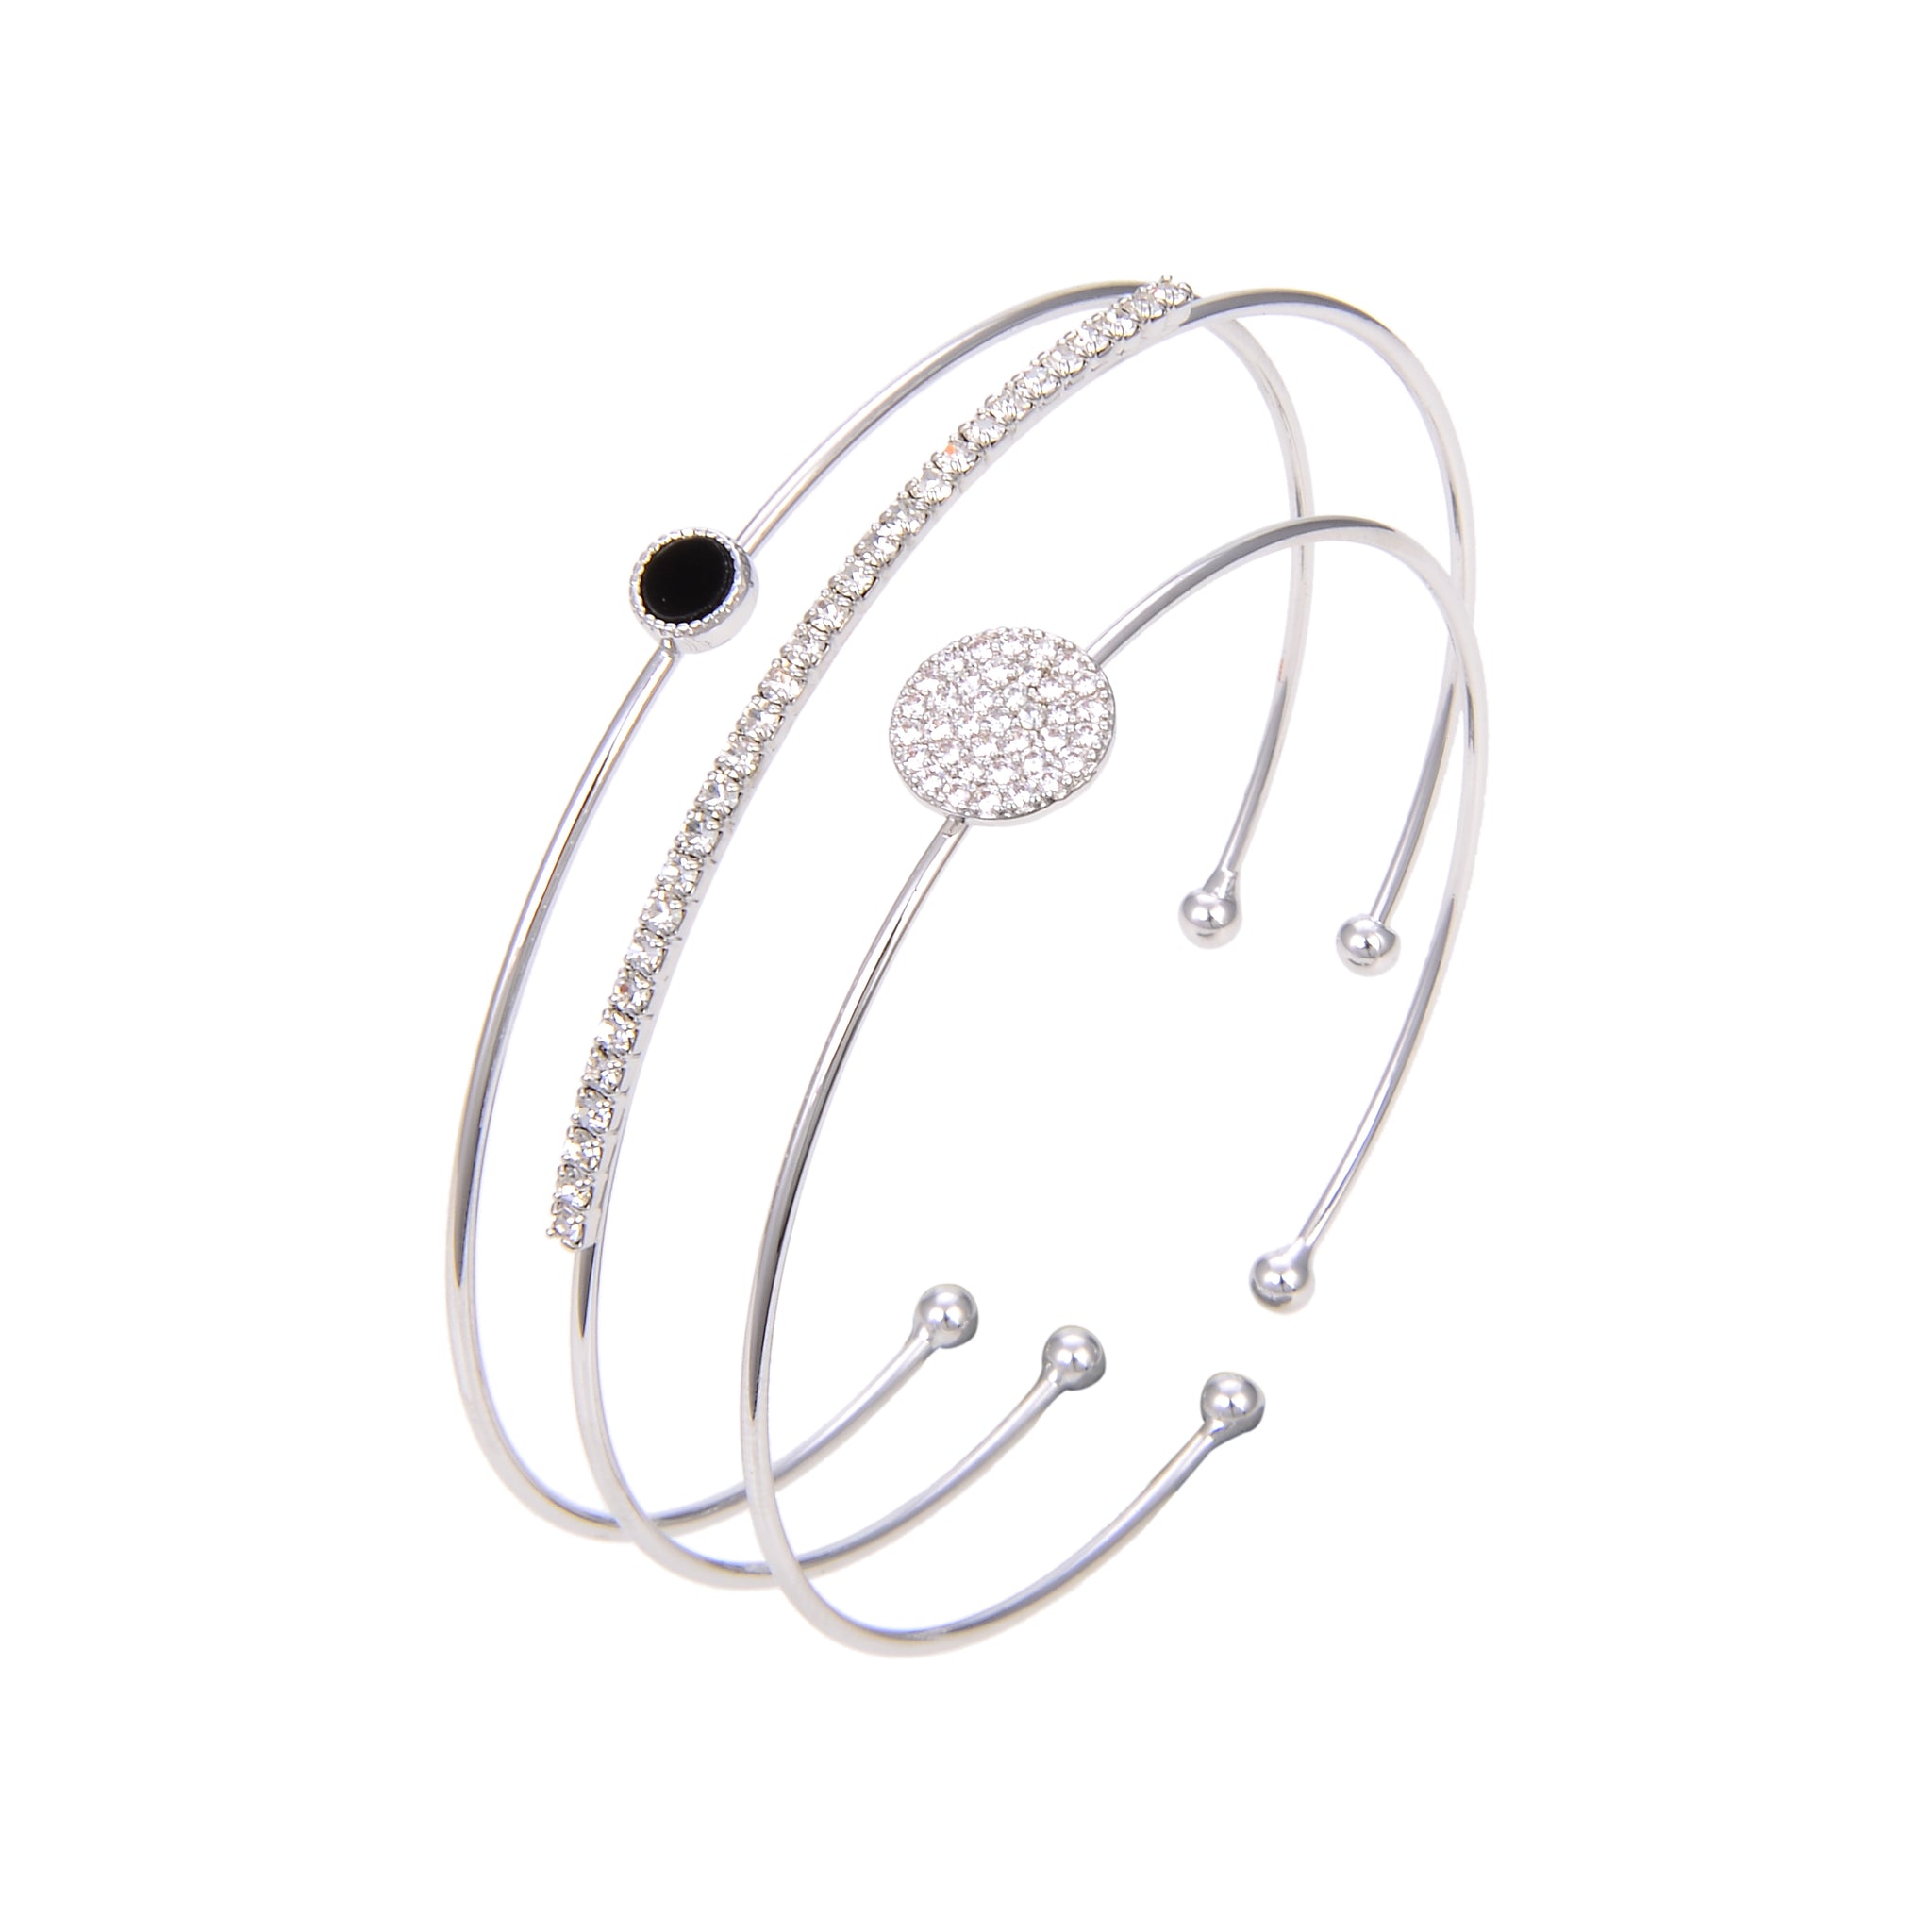 Silver Plated Cubic Zirconia With Black Stone Bangle Bracelet, CZ Bangle Bracelet